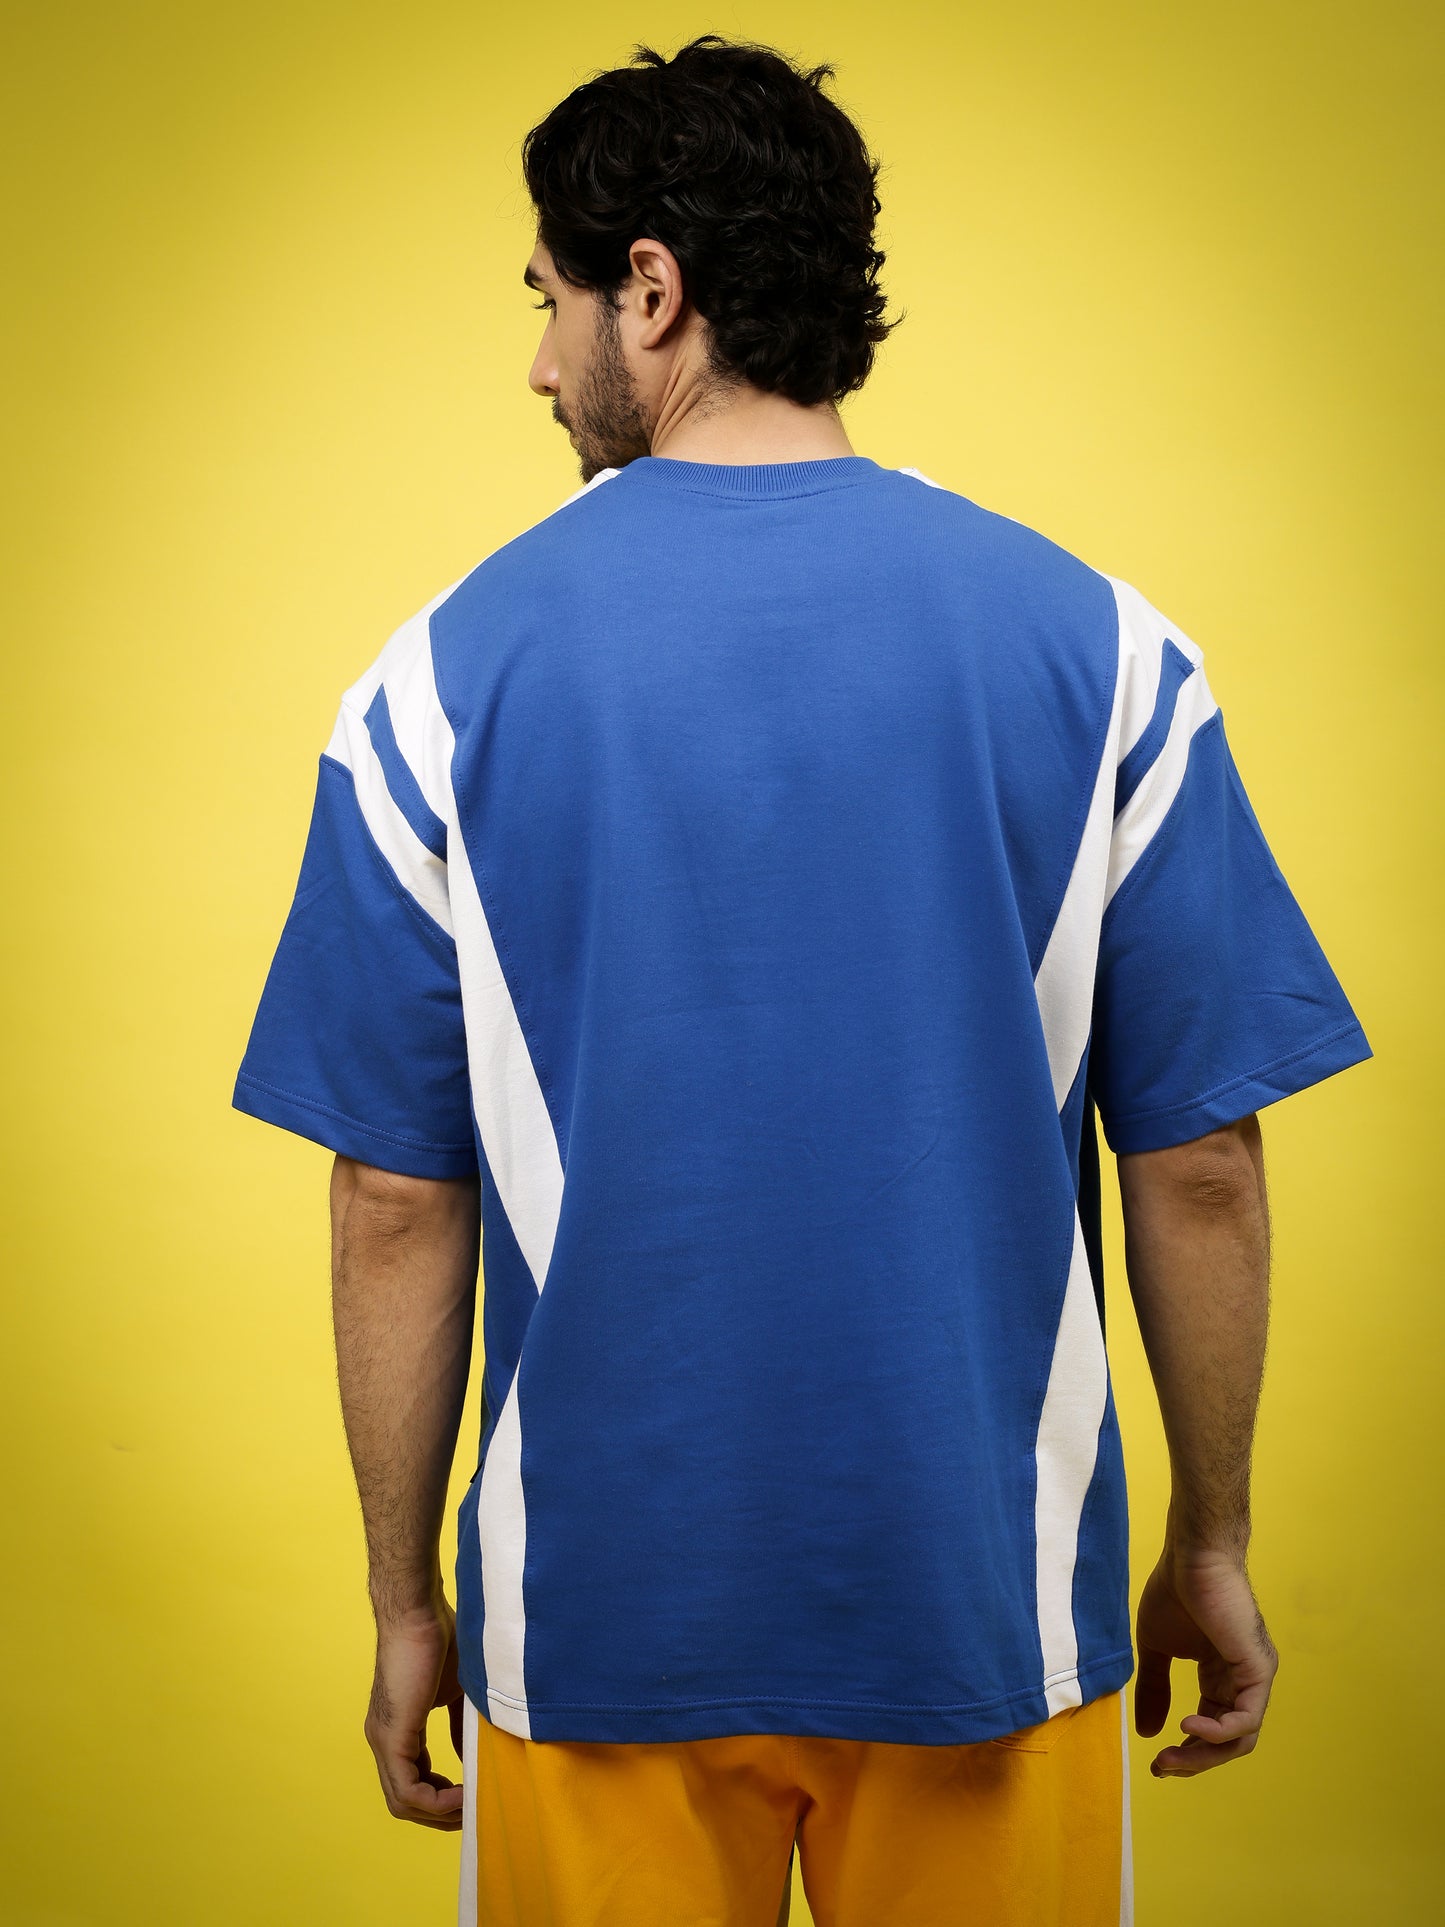 Ninja Storm Over-Sized T-Shirt (Royal Blue)